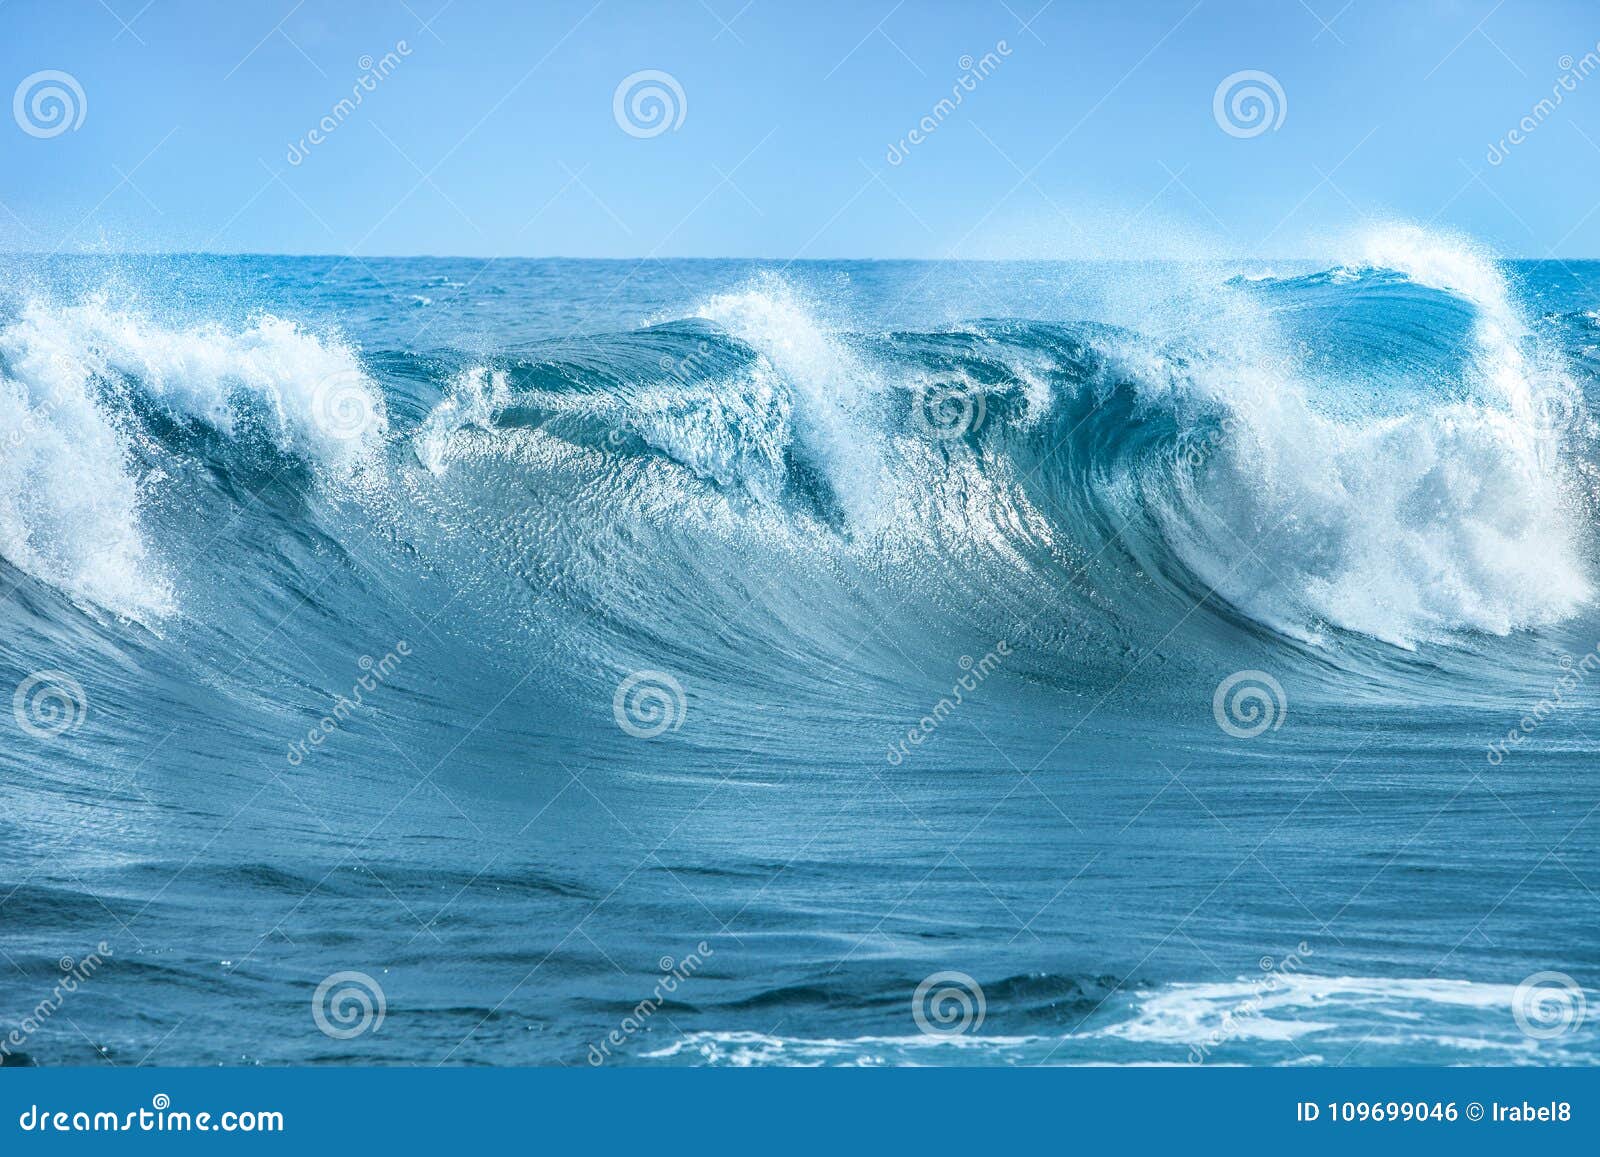 wave in atlantic ocean